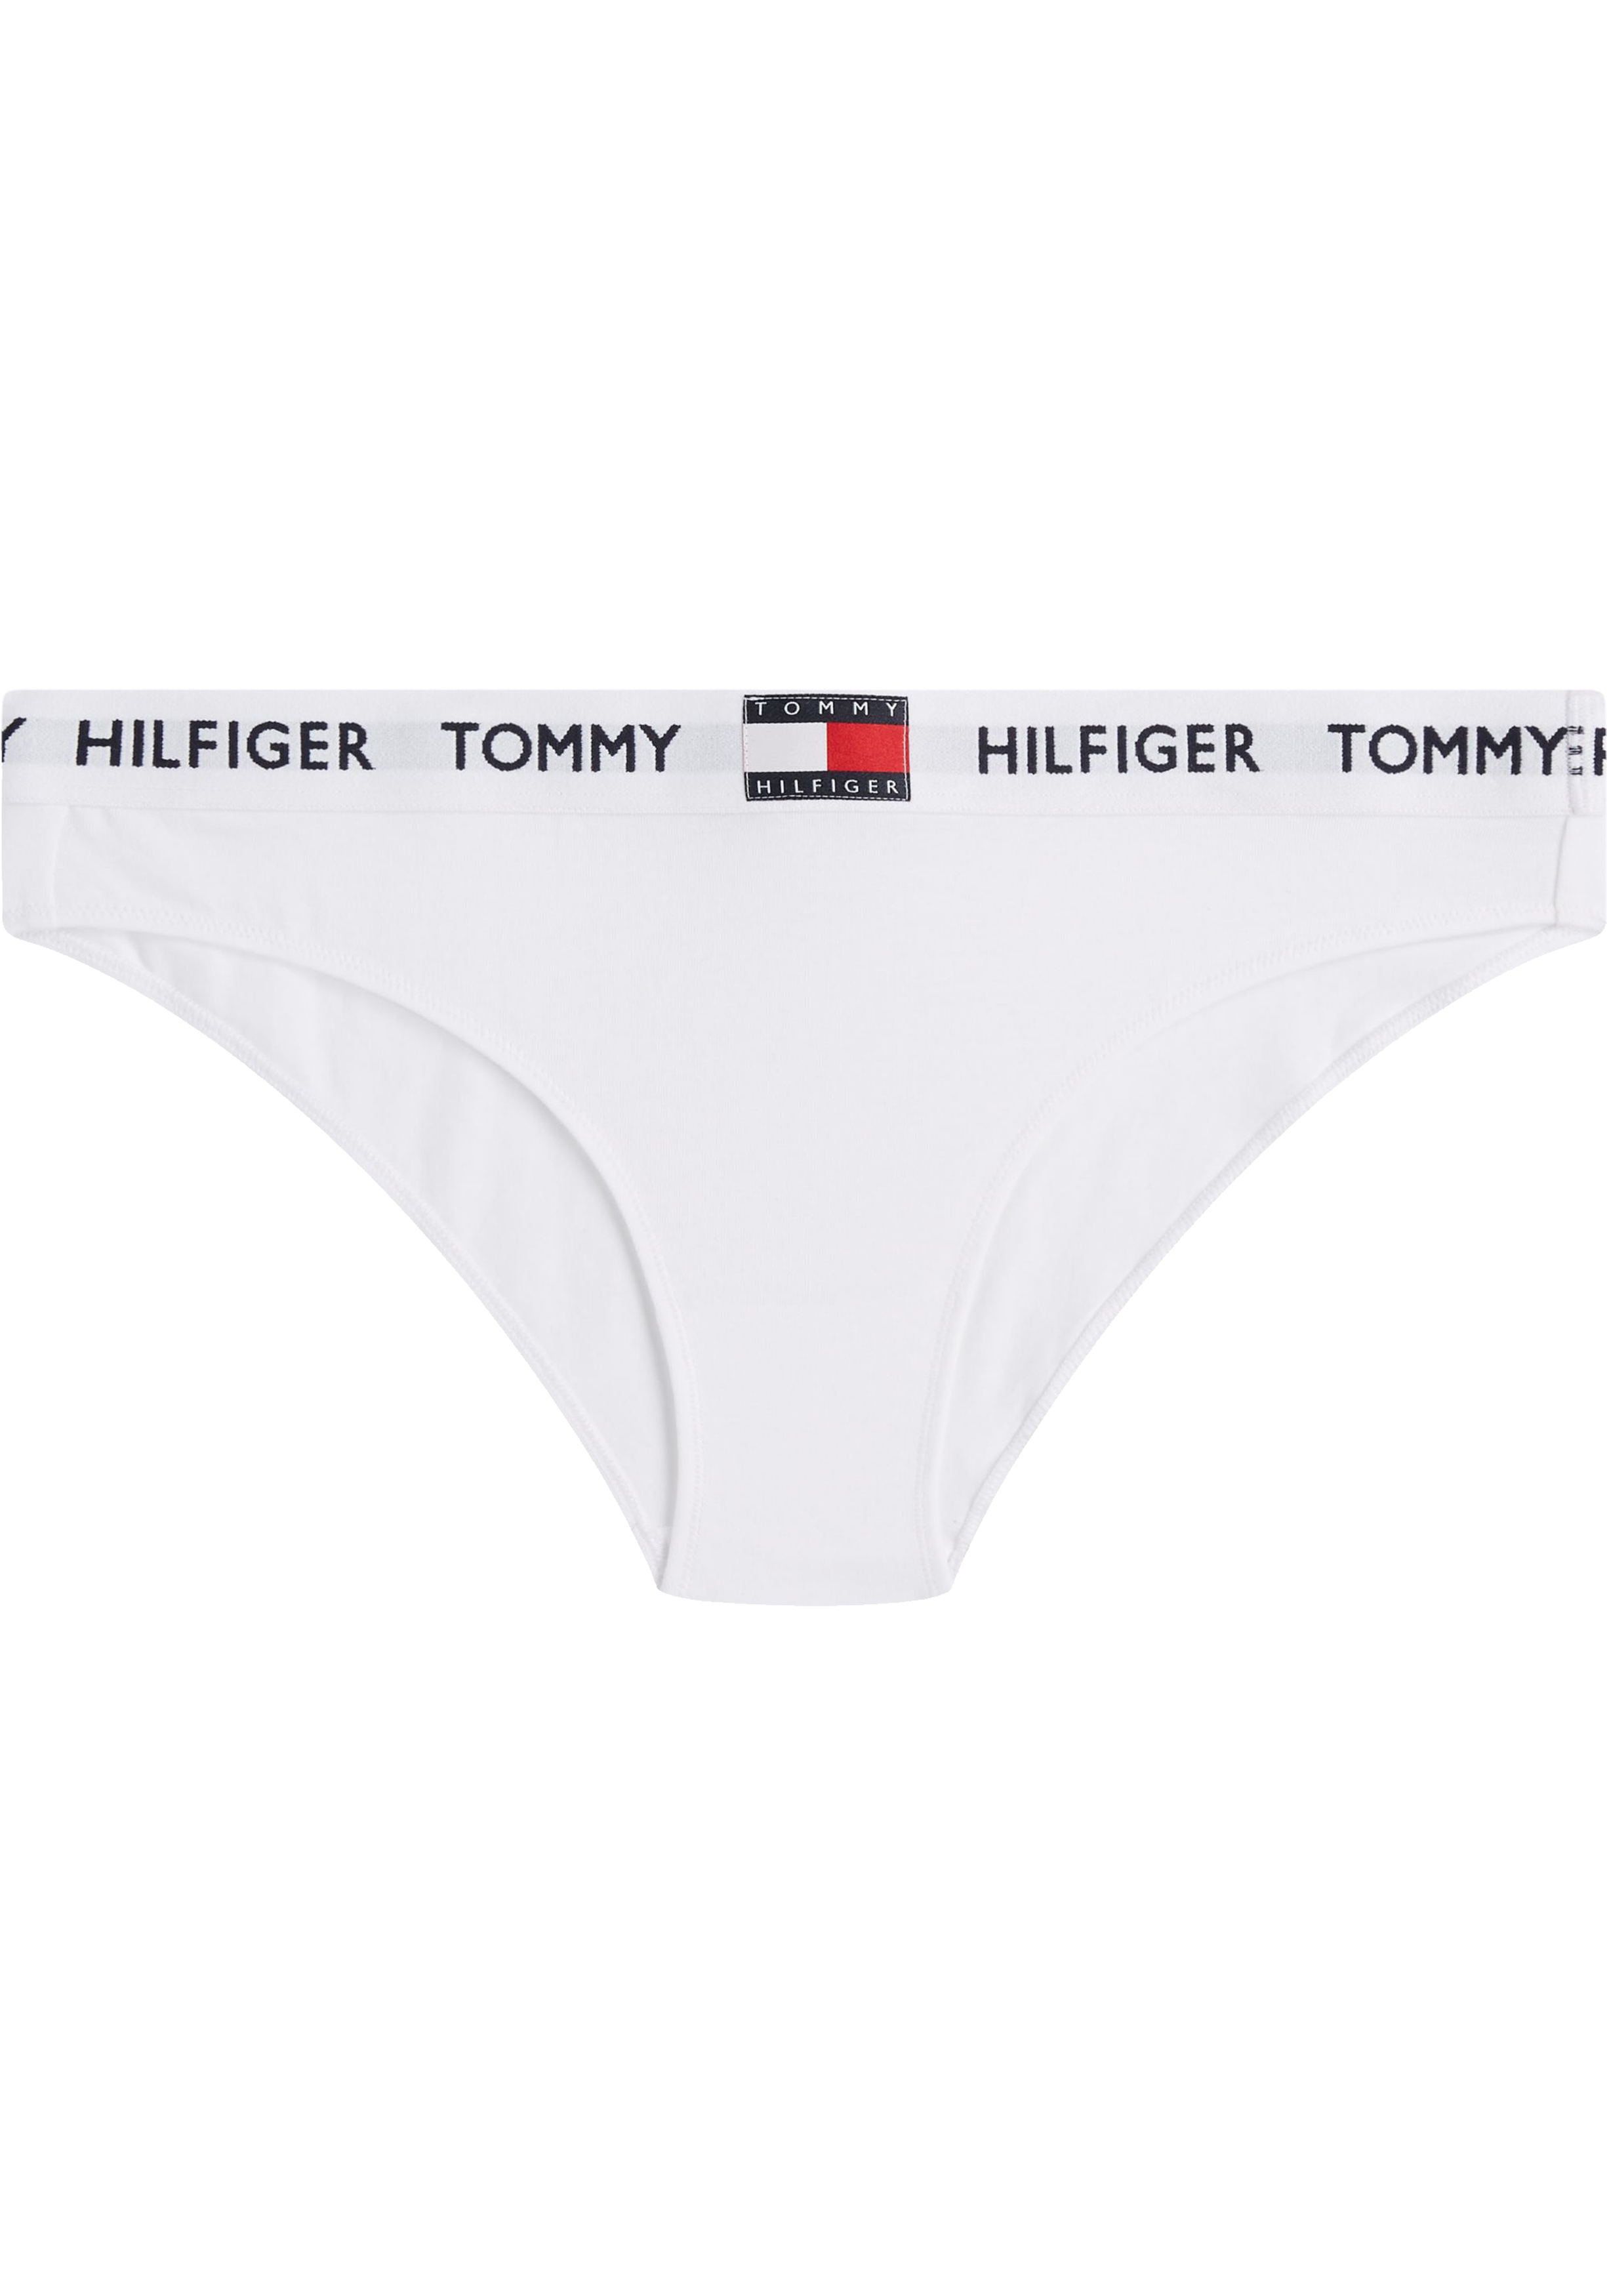 SALE Tommy met kortingen 85 (1-pack), slip dames wit 50% bikini - Tommy Hilfiger tot